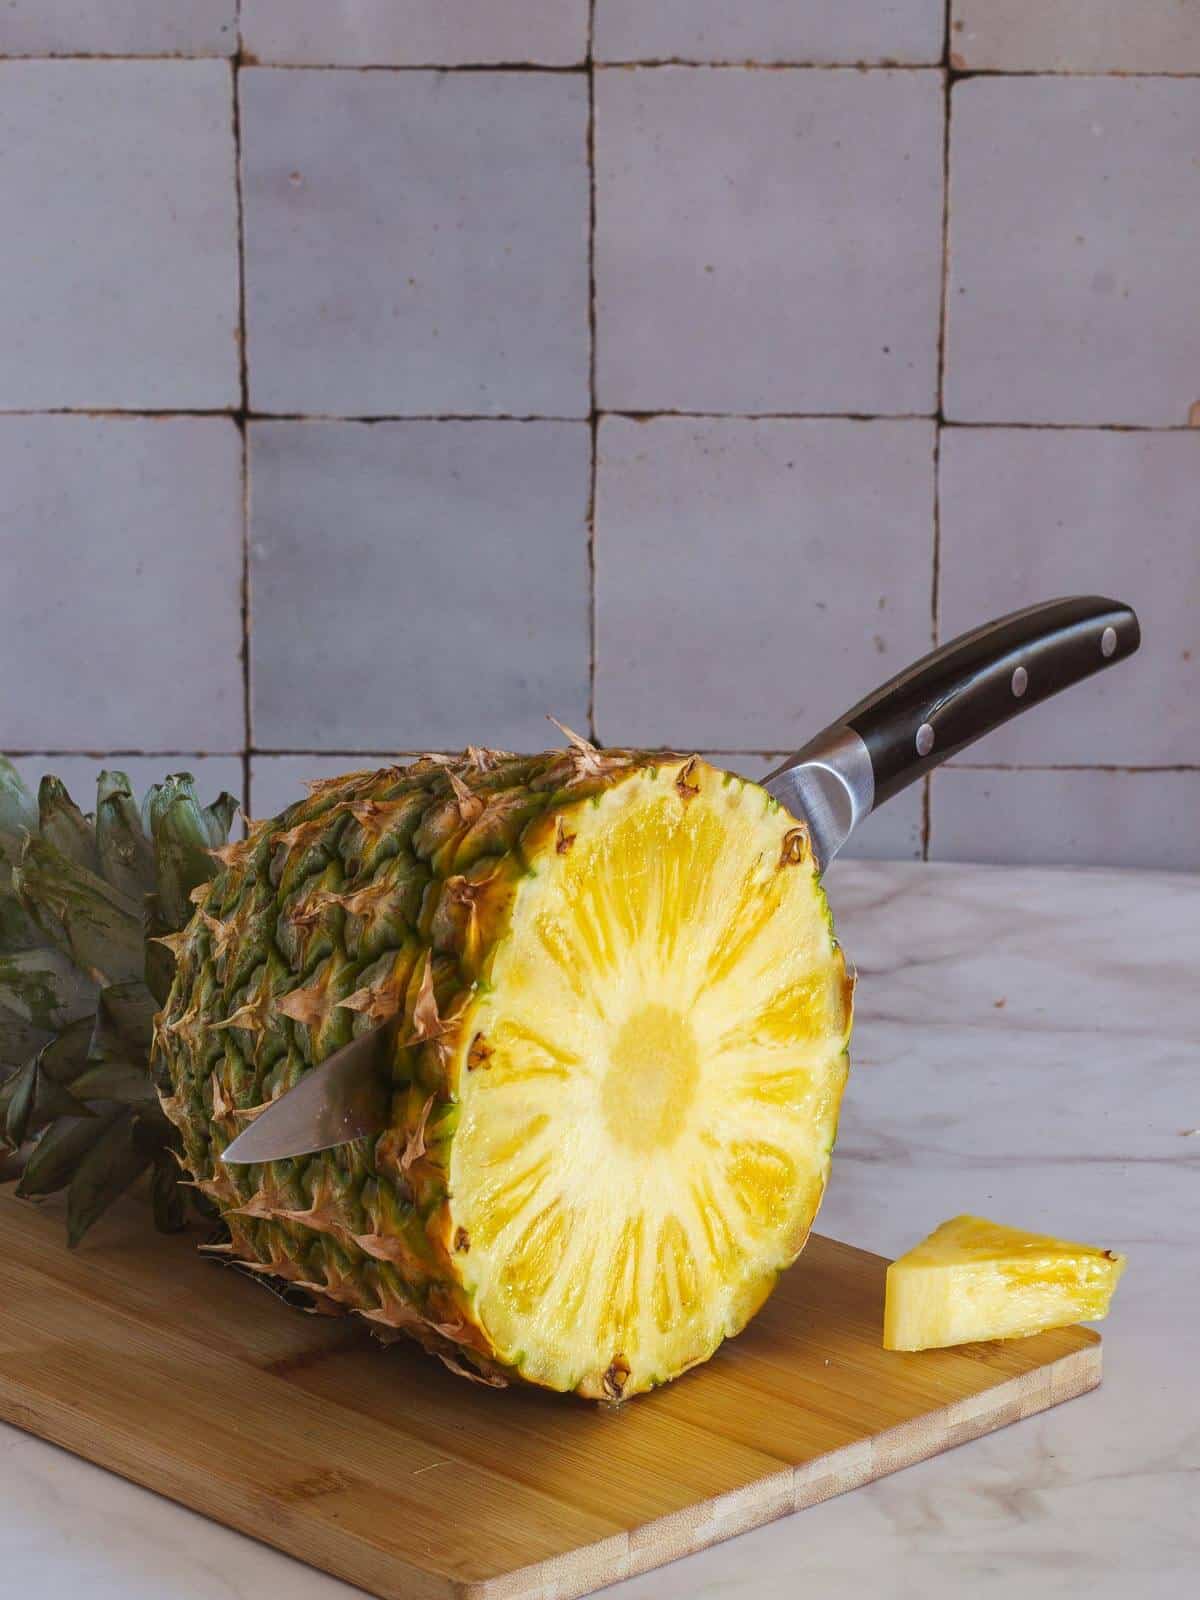 chopping fresh pineapple.